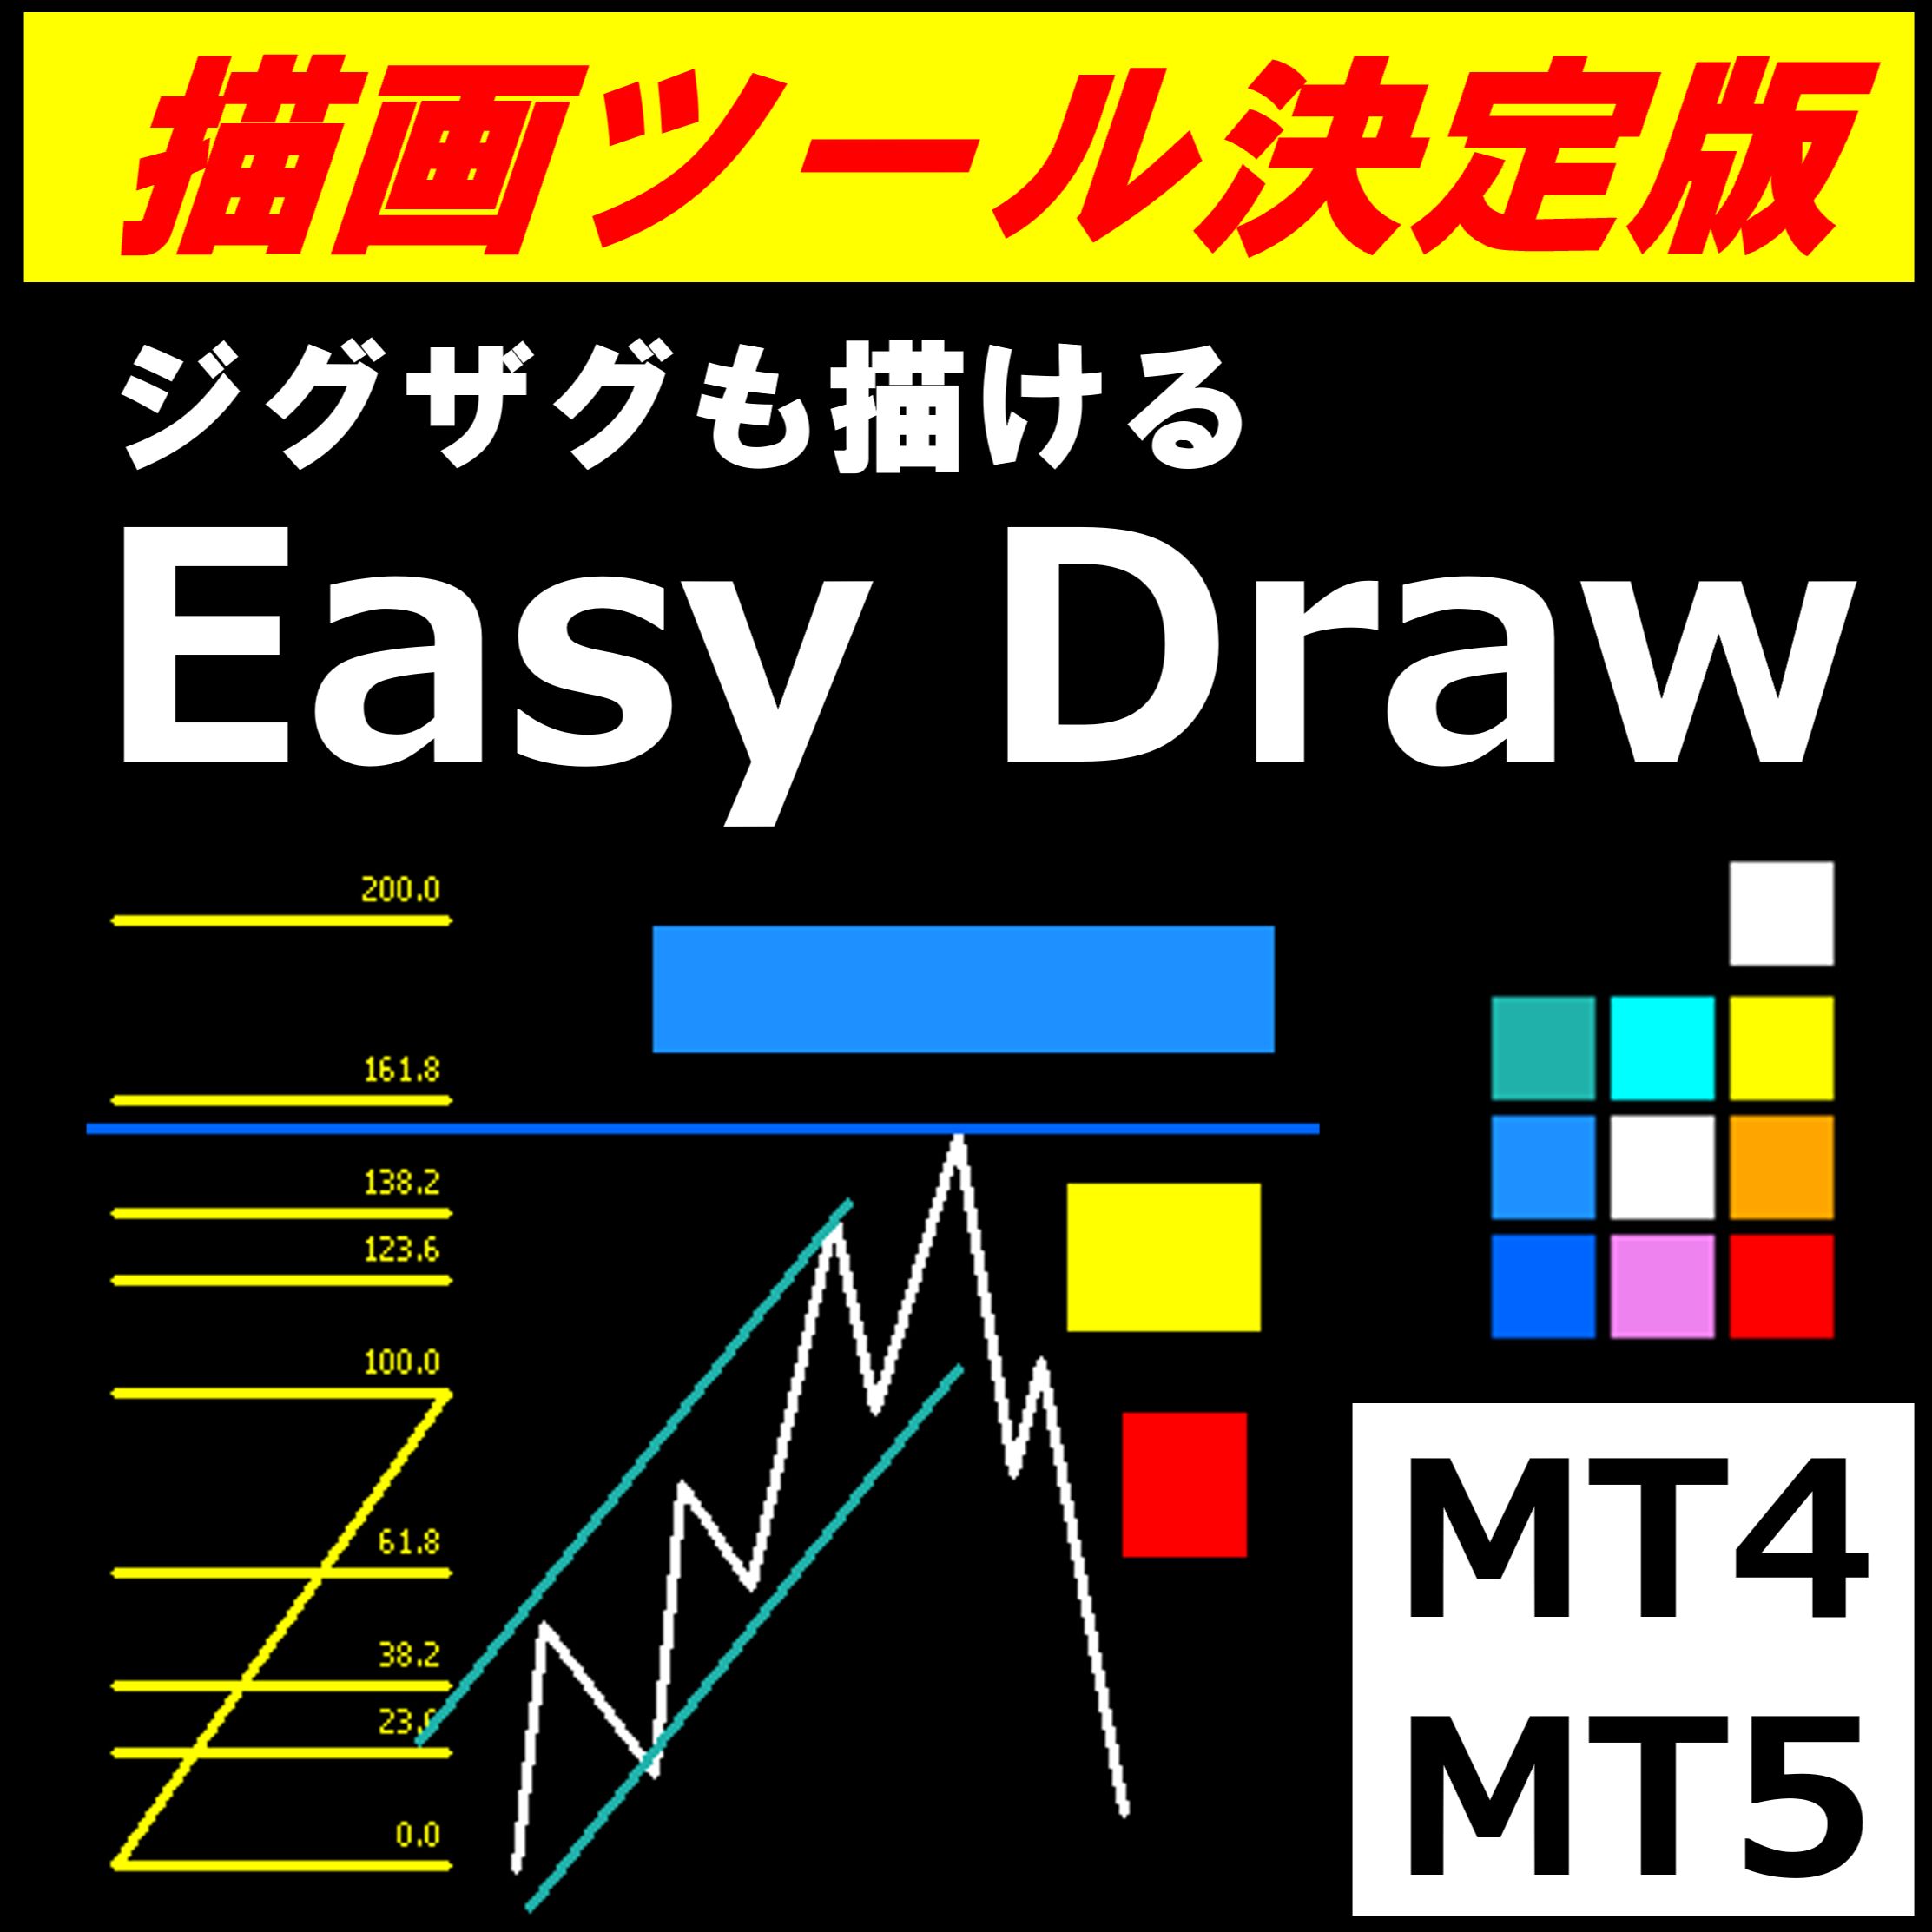 Easy Draw 【ジグザグも描けるショートカット描画】 インジケーター・電子書籍